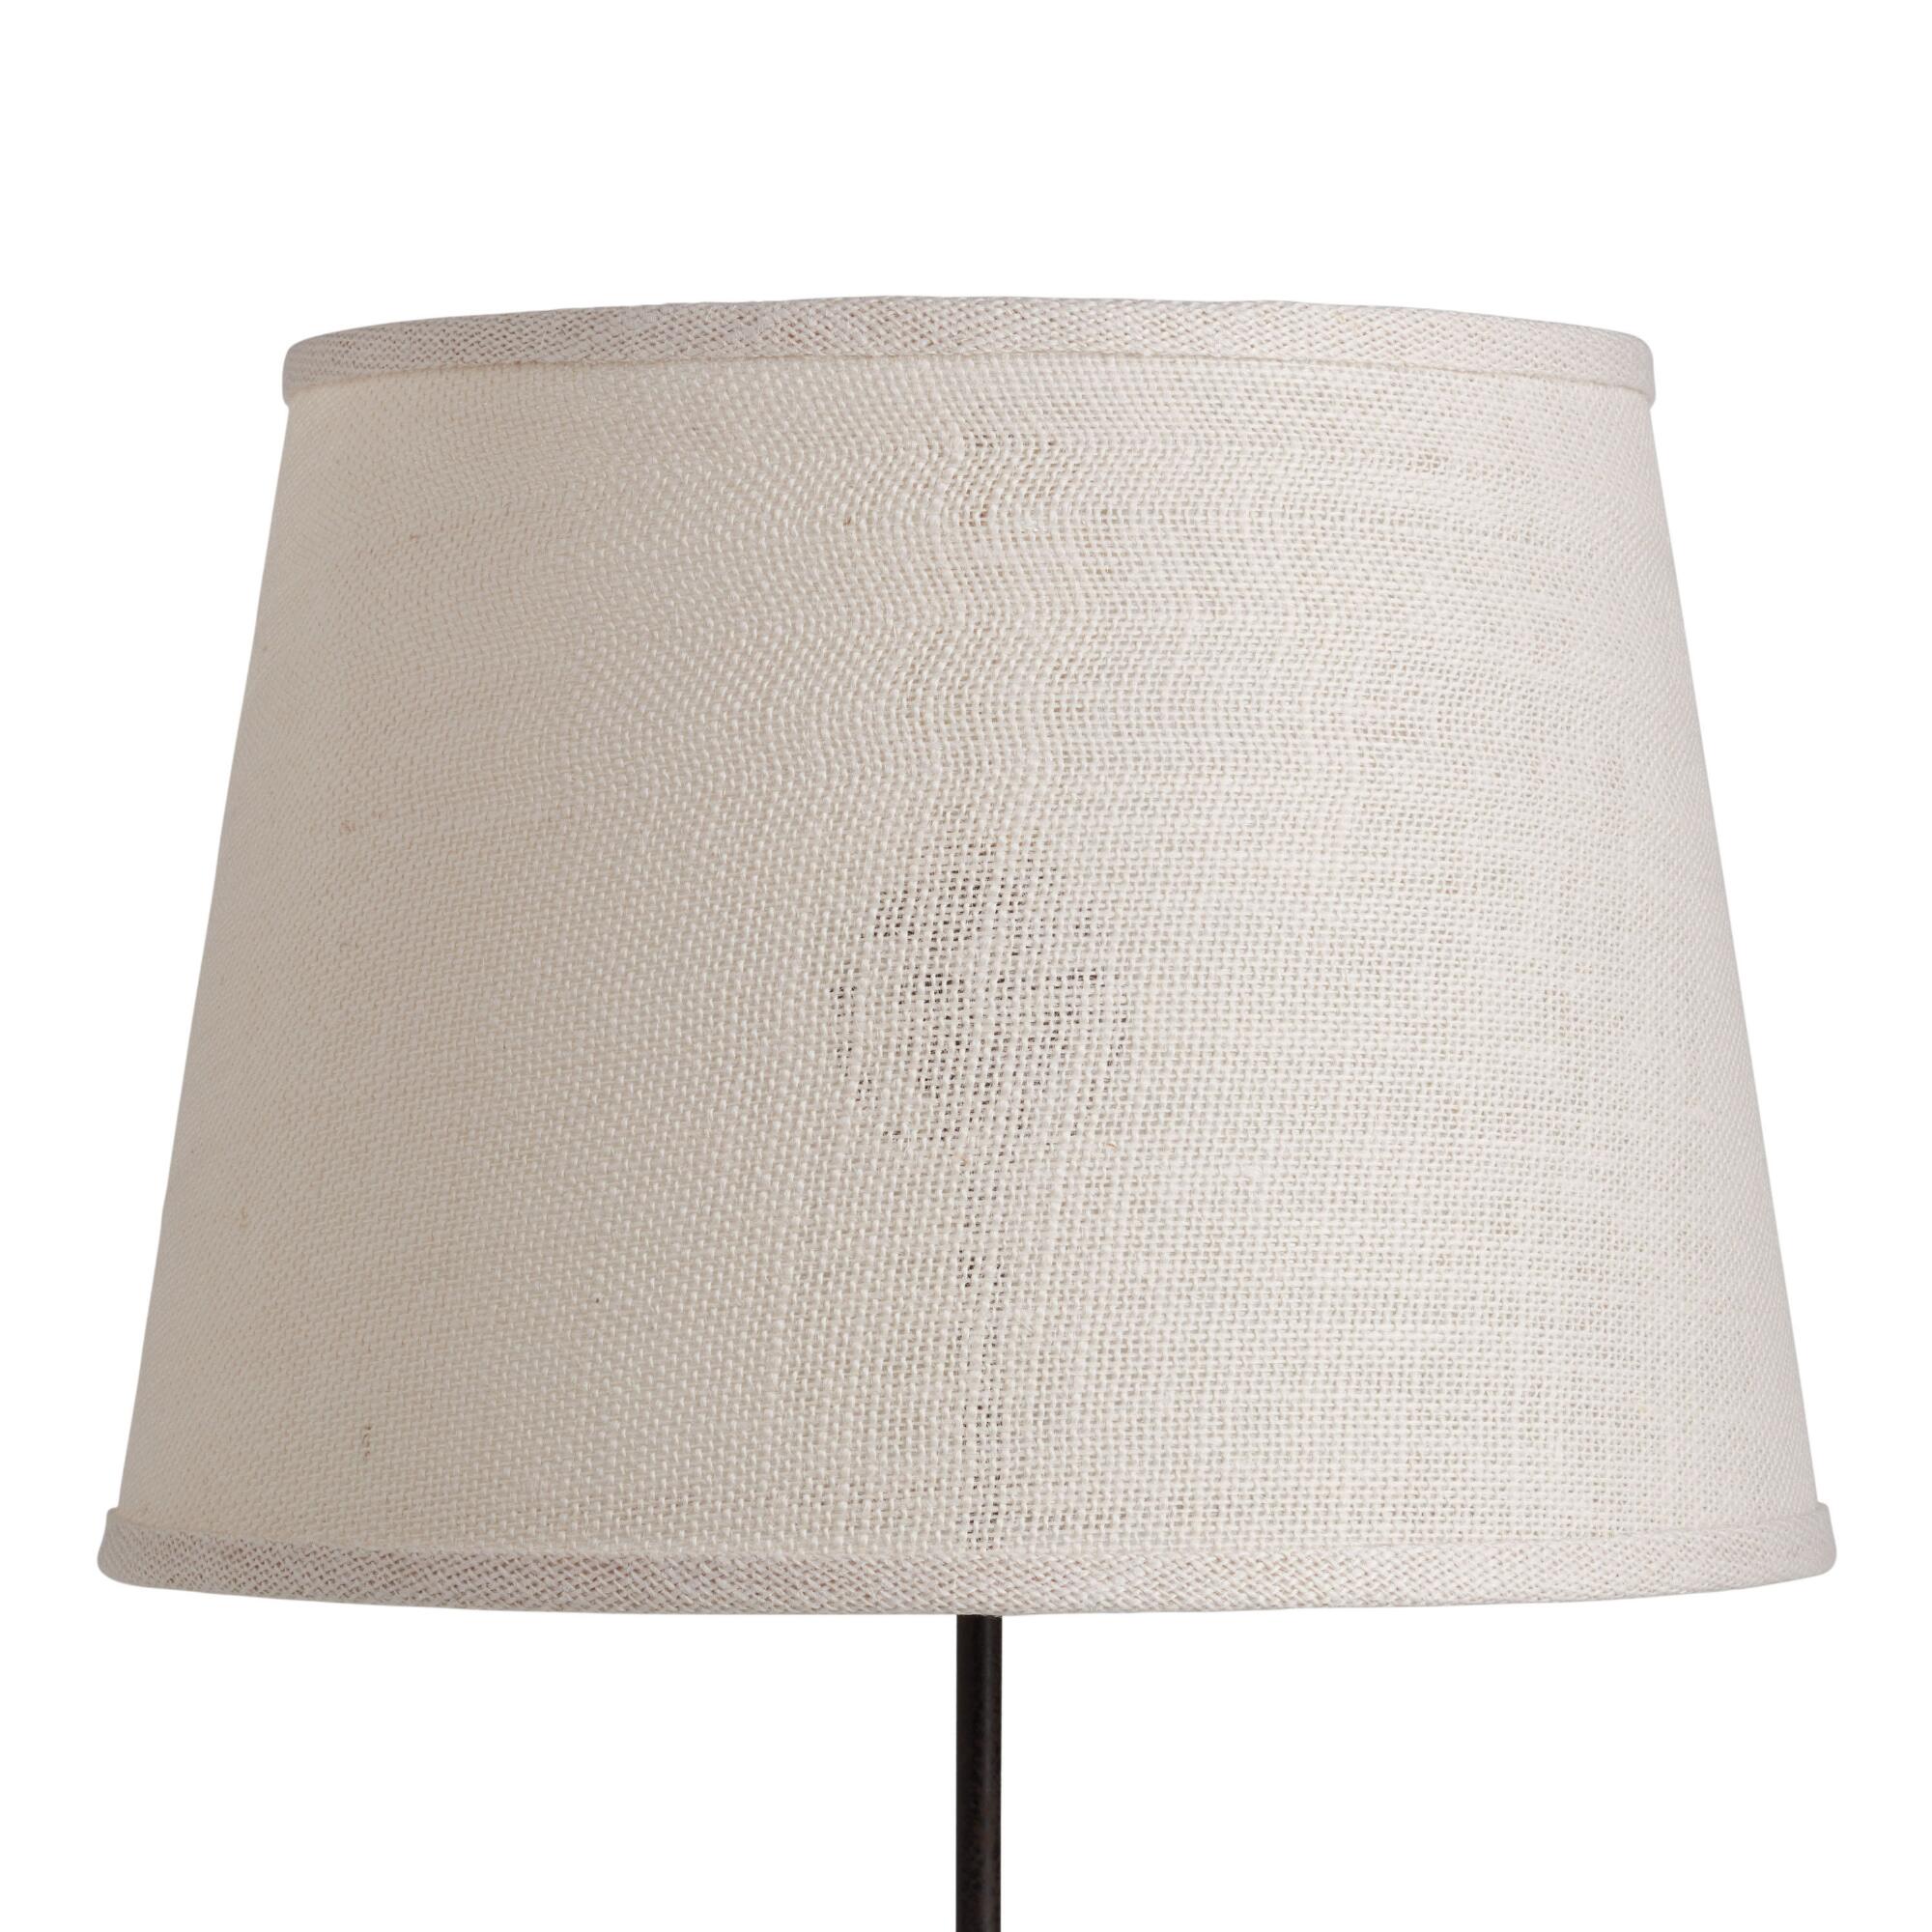 Marshmallow White Burlap Table Lamp Shade - Natural Fiber by World Market